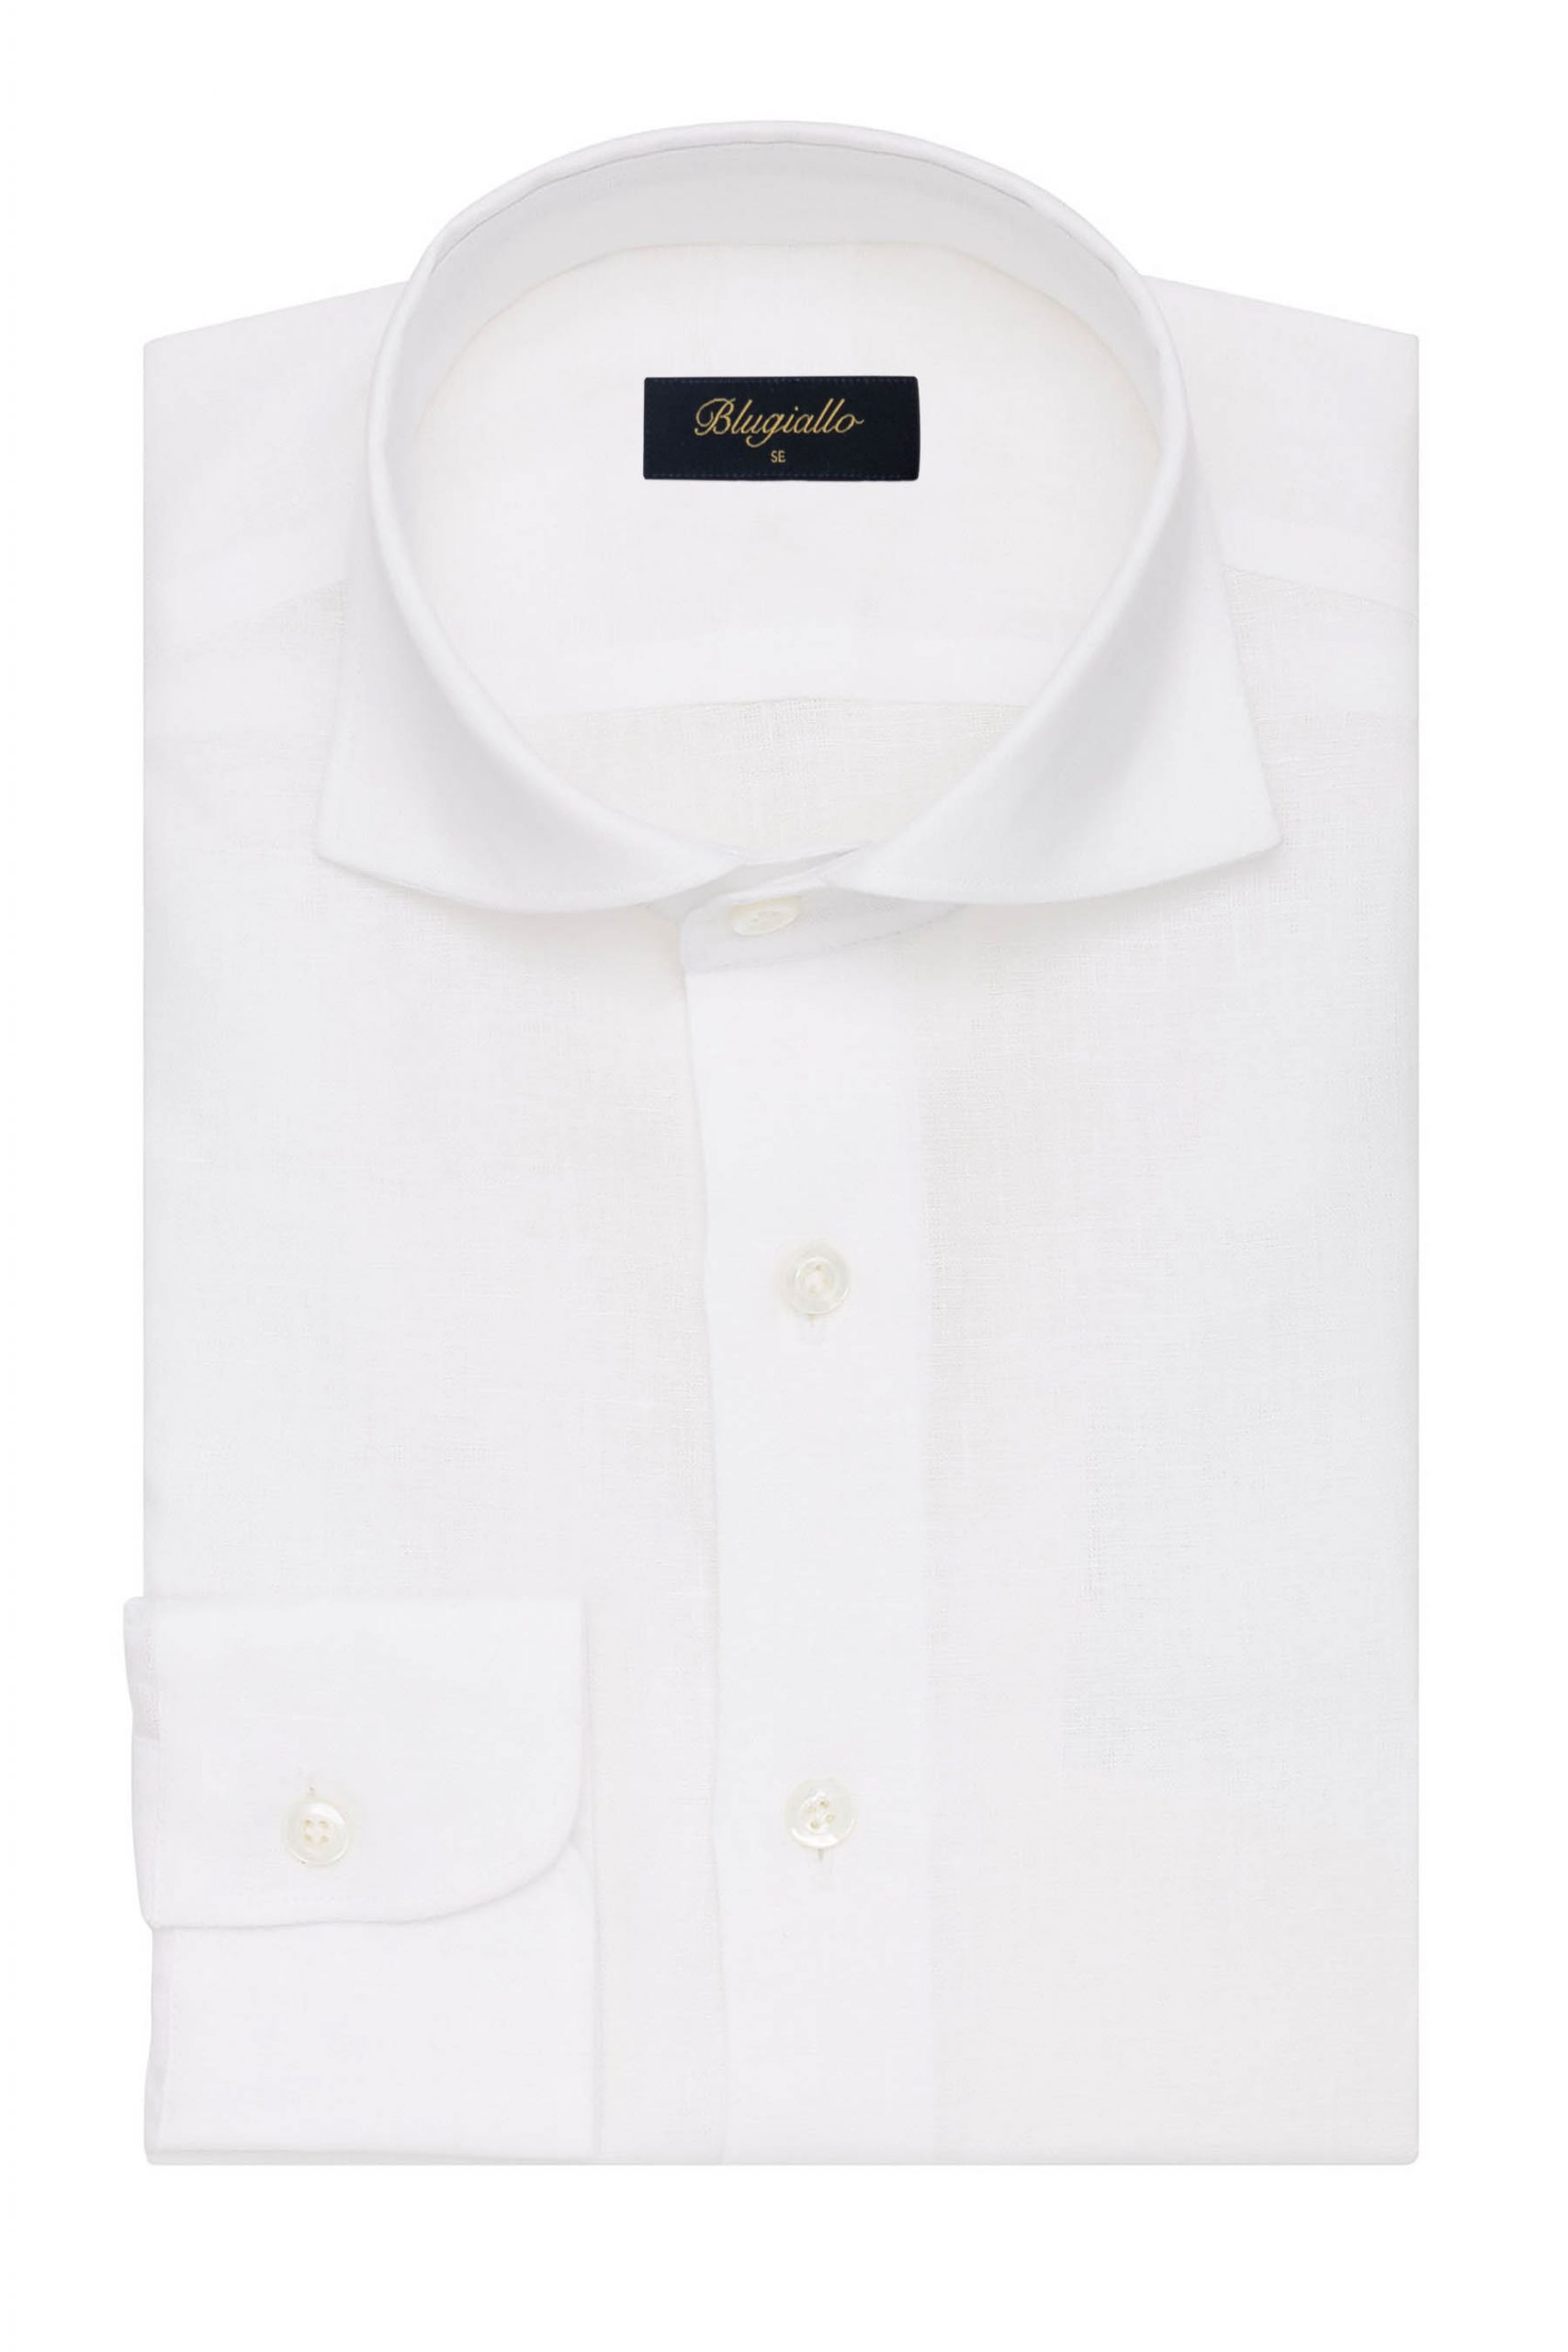 Shirt cotton linen white image 6